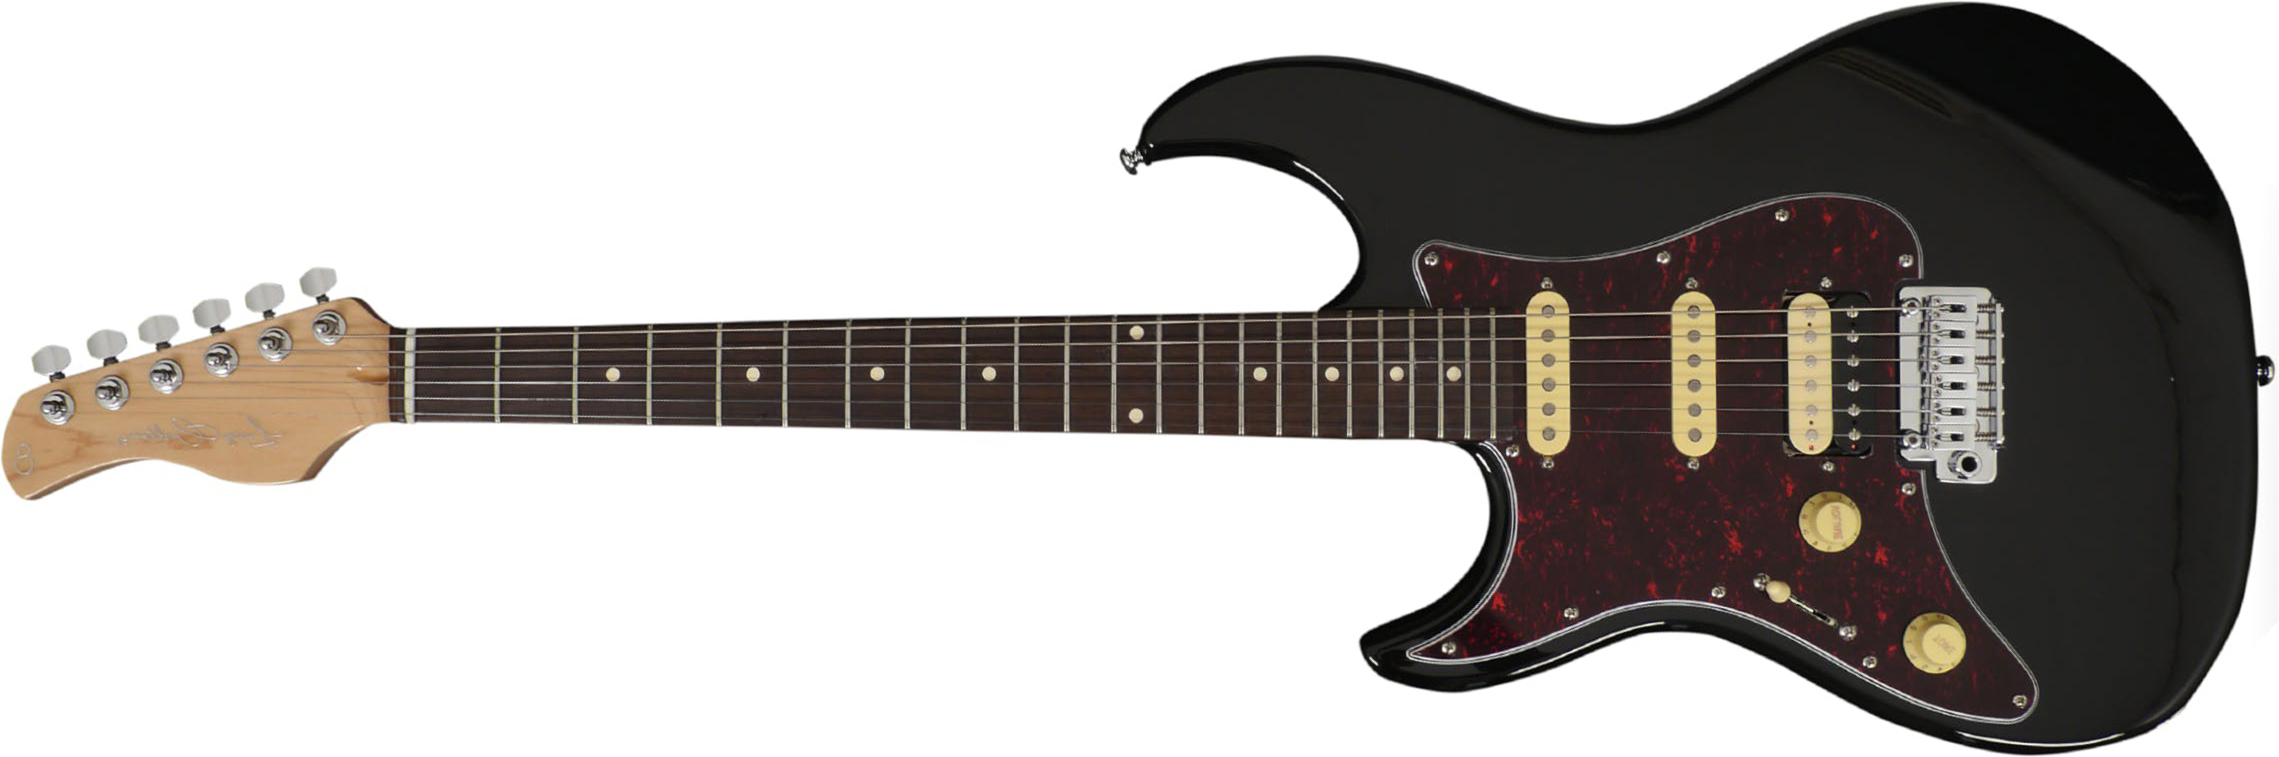 Sire Larry Carlton S3 Lh Signature Gaucher Hss Trem Rw - Black - Left-handed electric guitar - Main picture